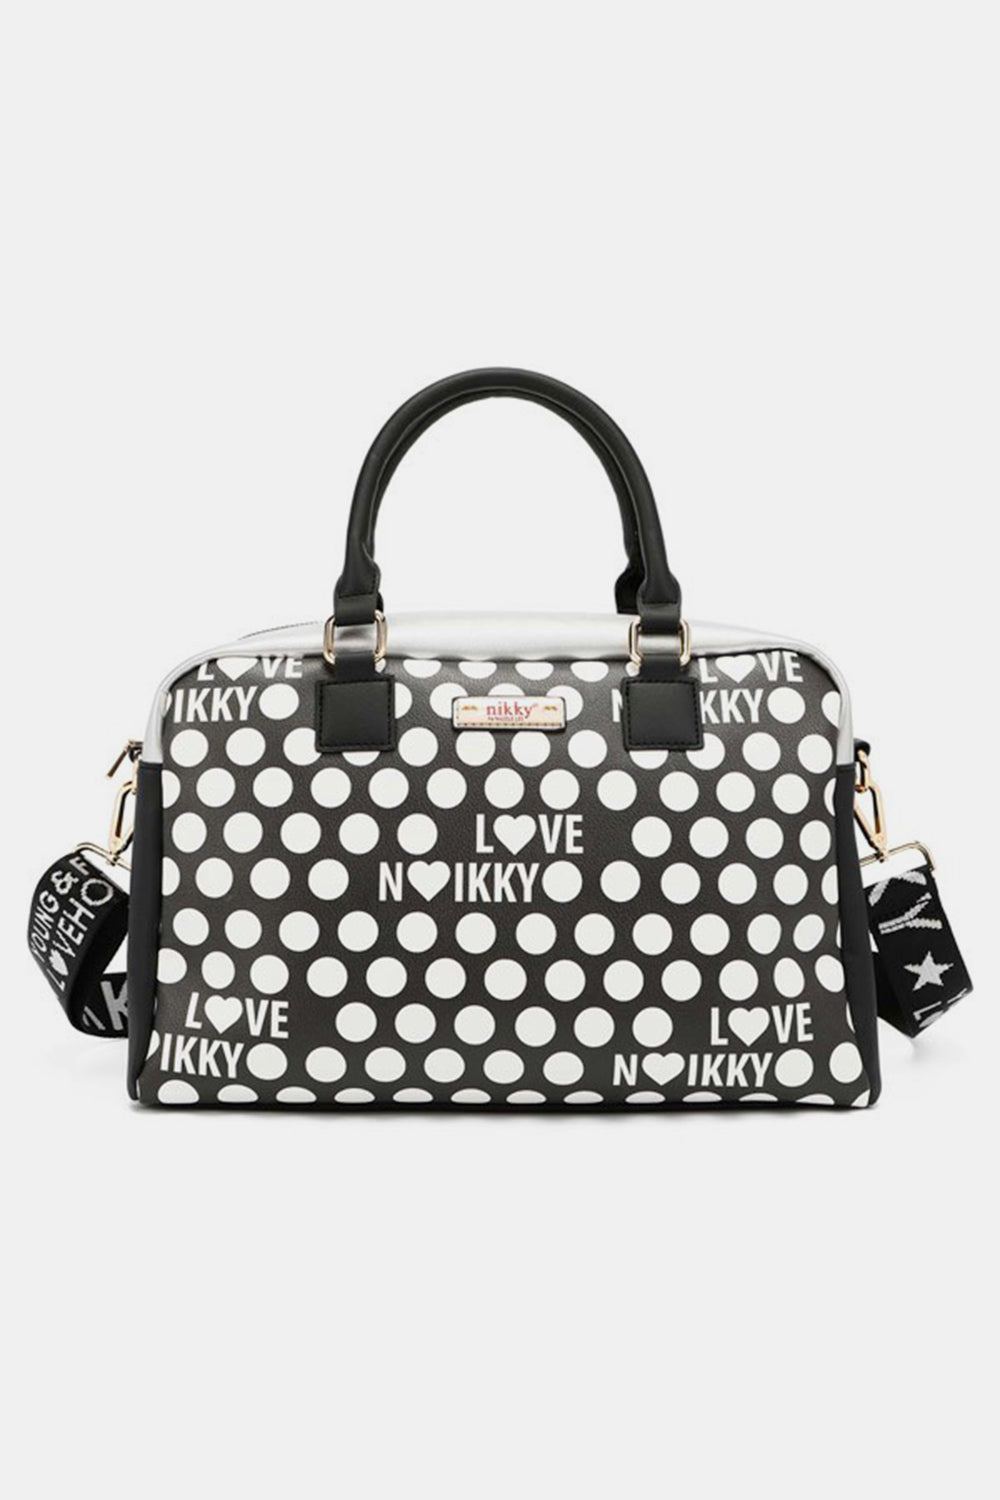 Nicole Lee USA Contrast Polka Dot Handbag Black One Size 